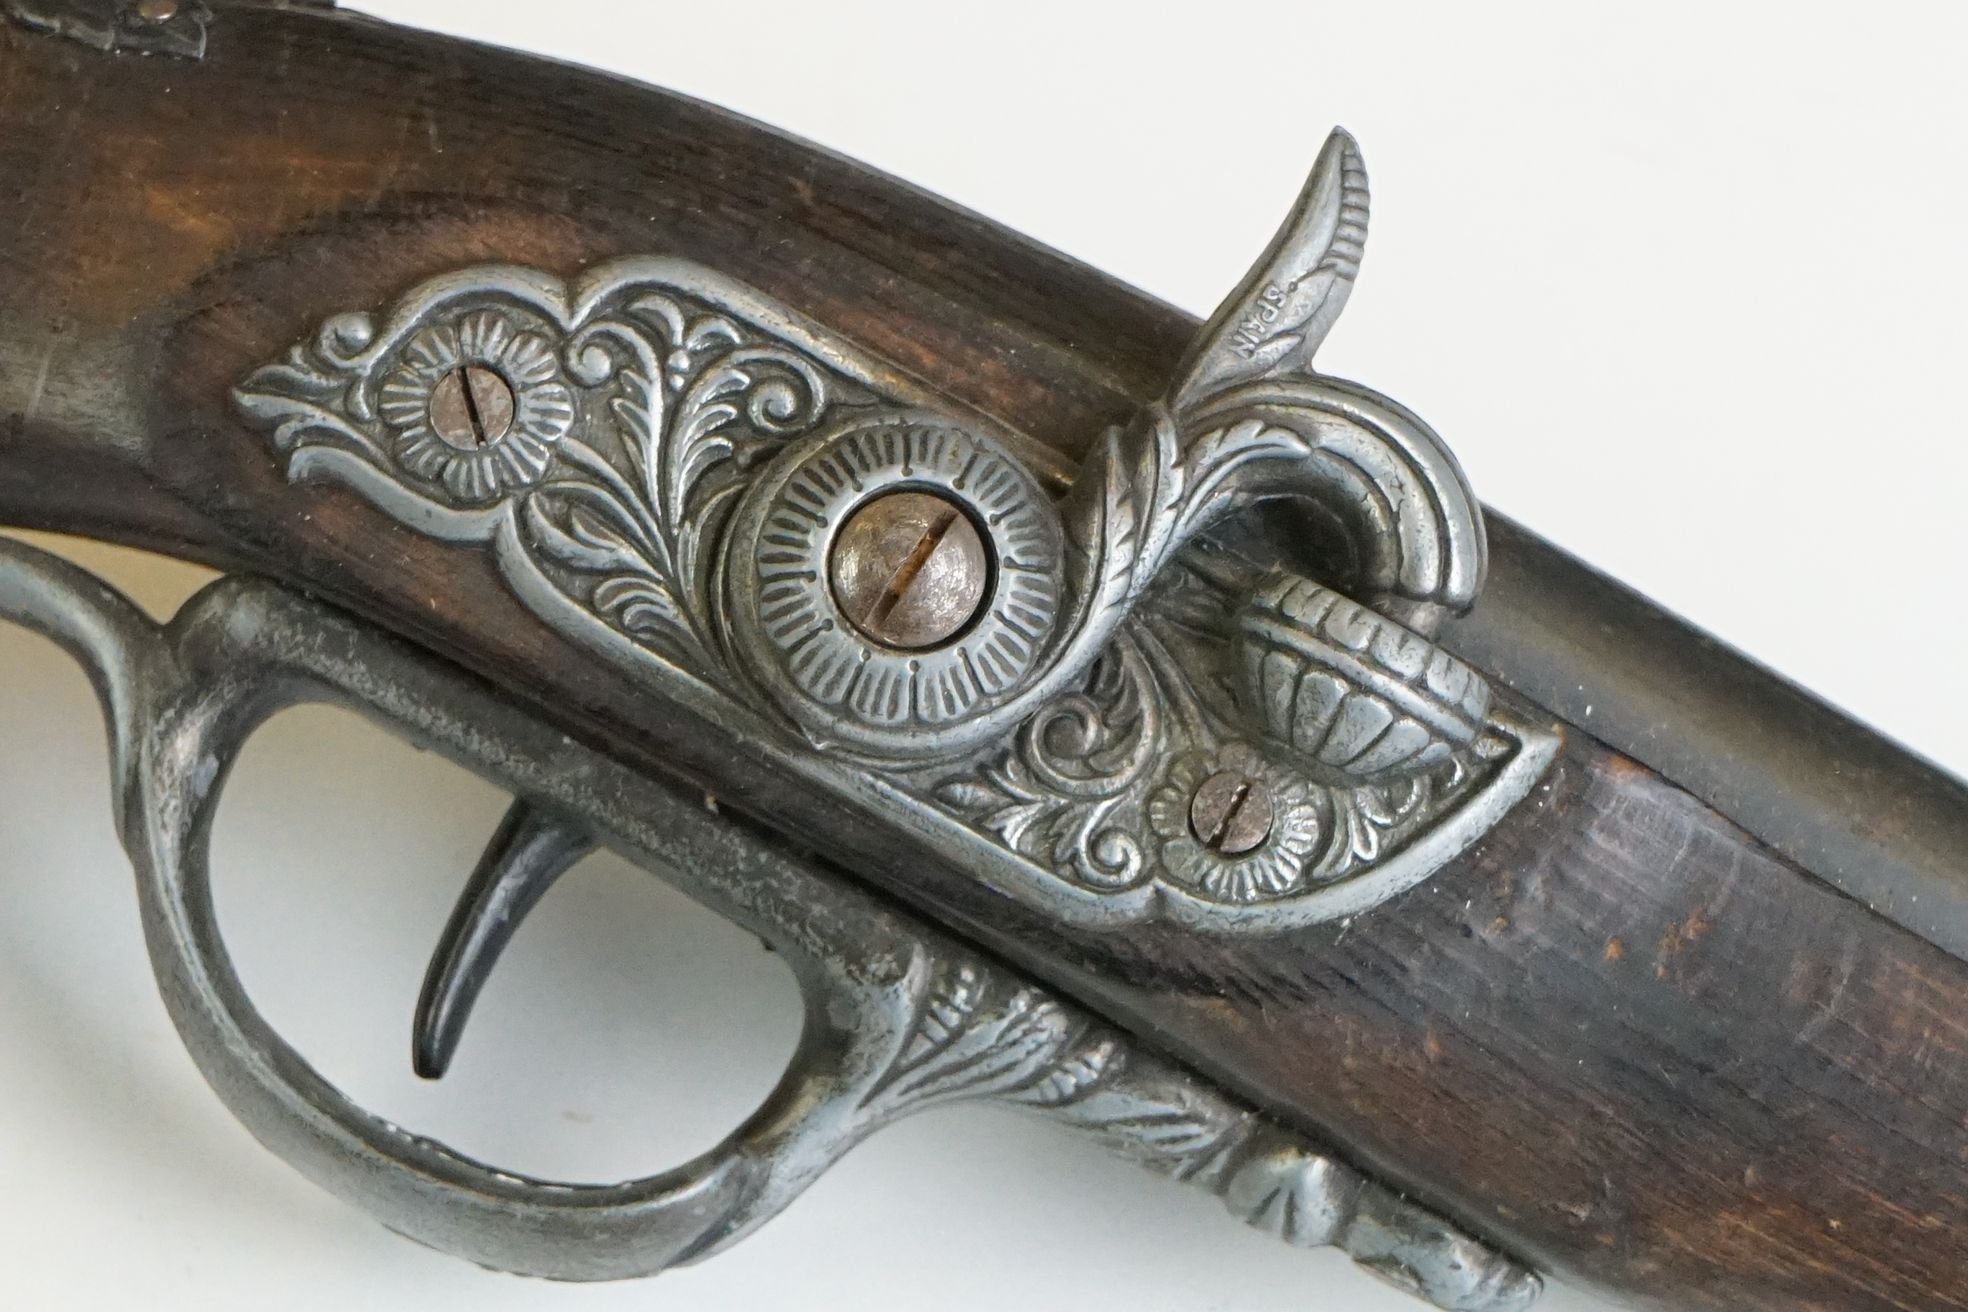 Pair of vintage replica flintlock pistols - Image 6 of 11